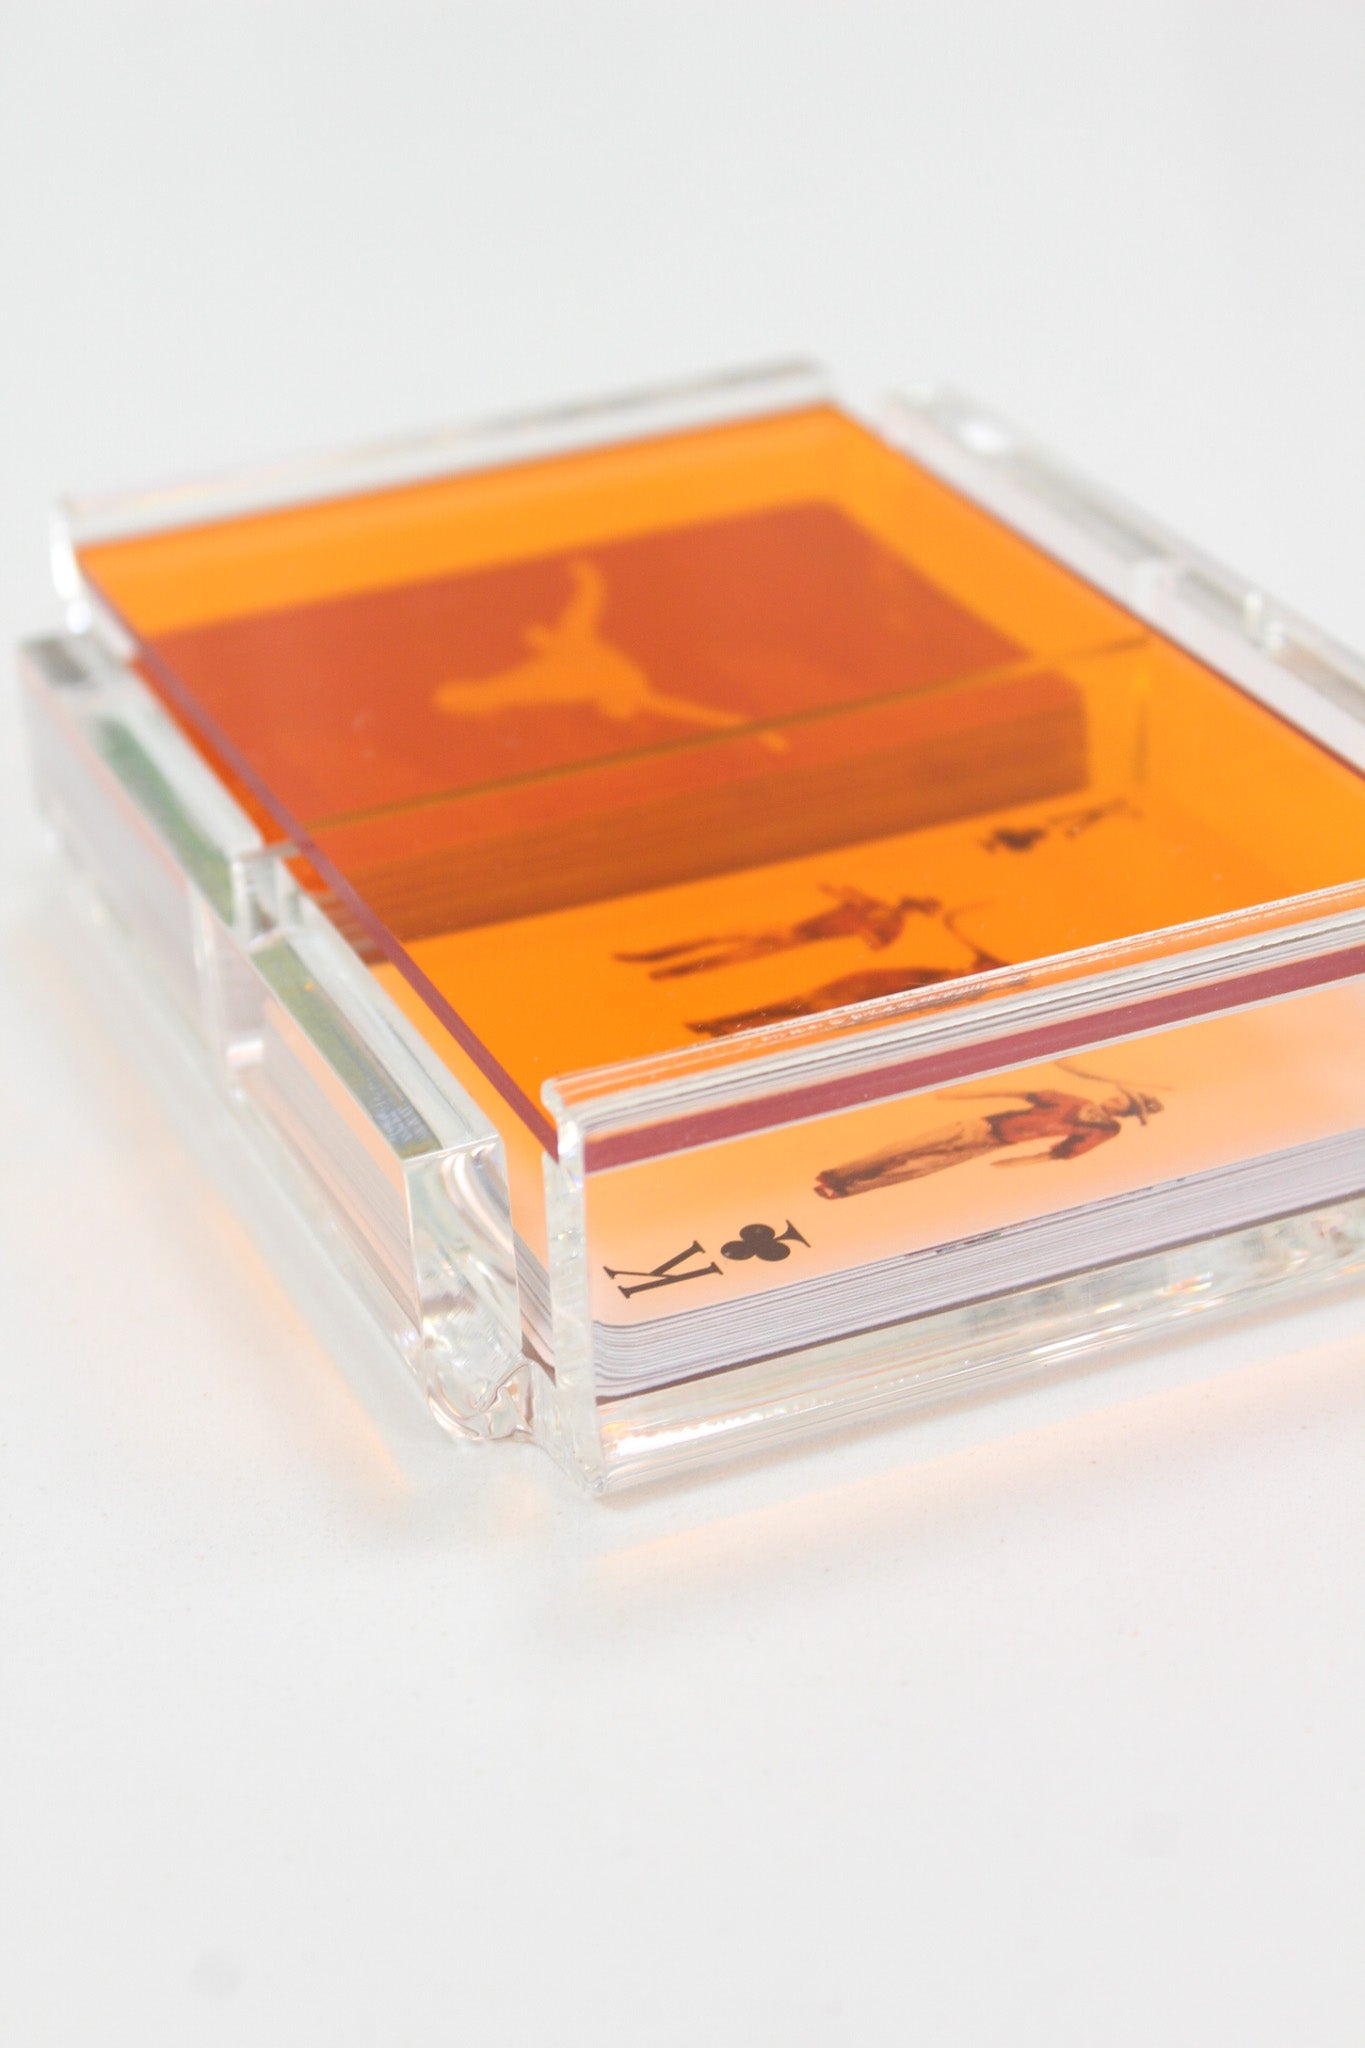 University of Texas Playing Card Display Bundle - Orange Translucent Acrylic Double Display